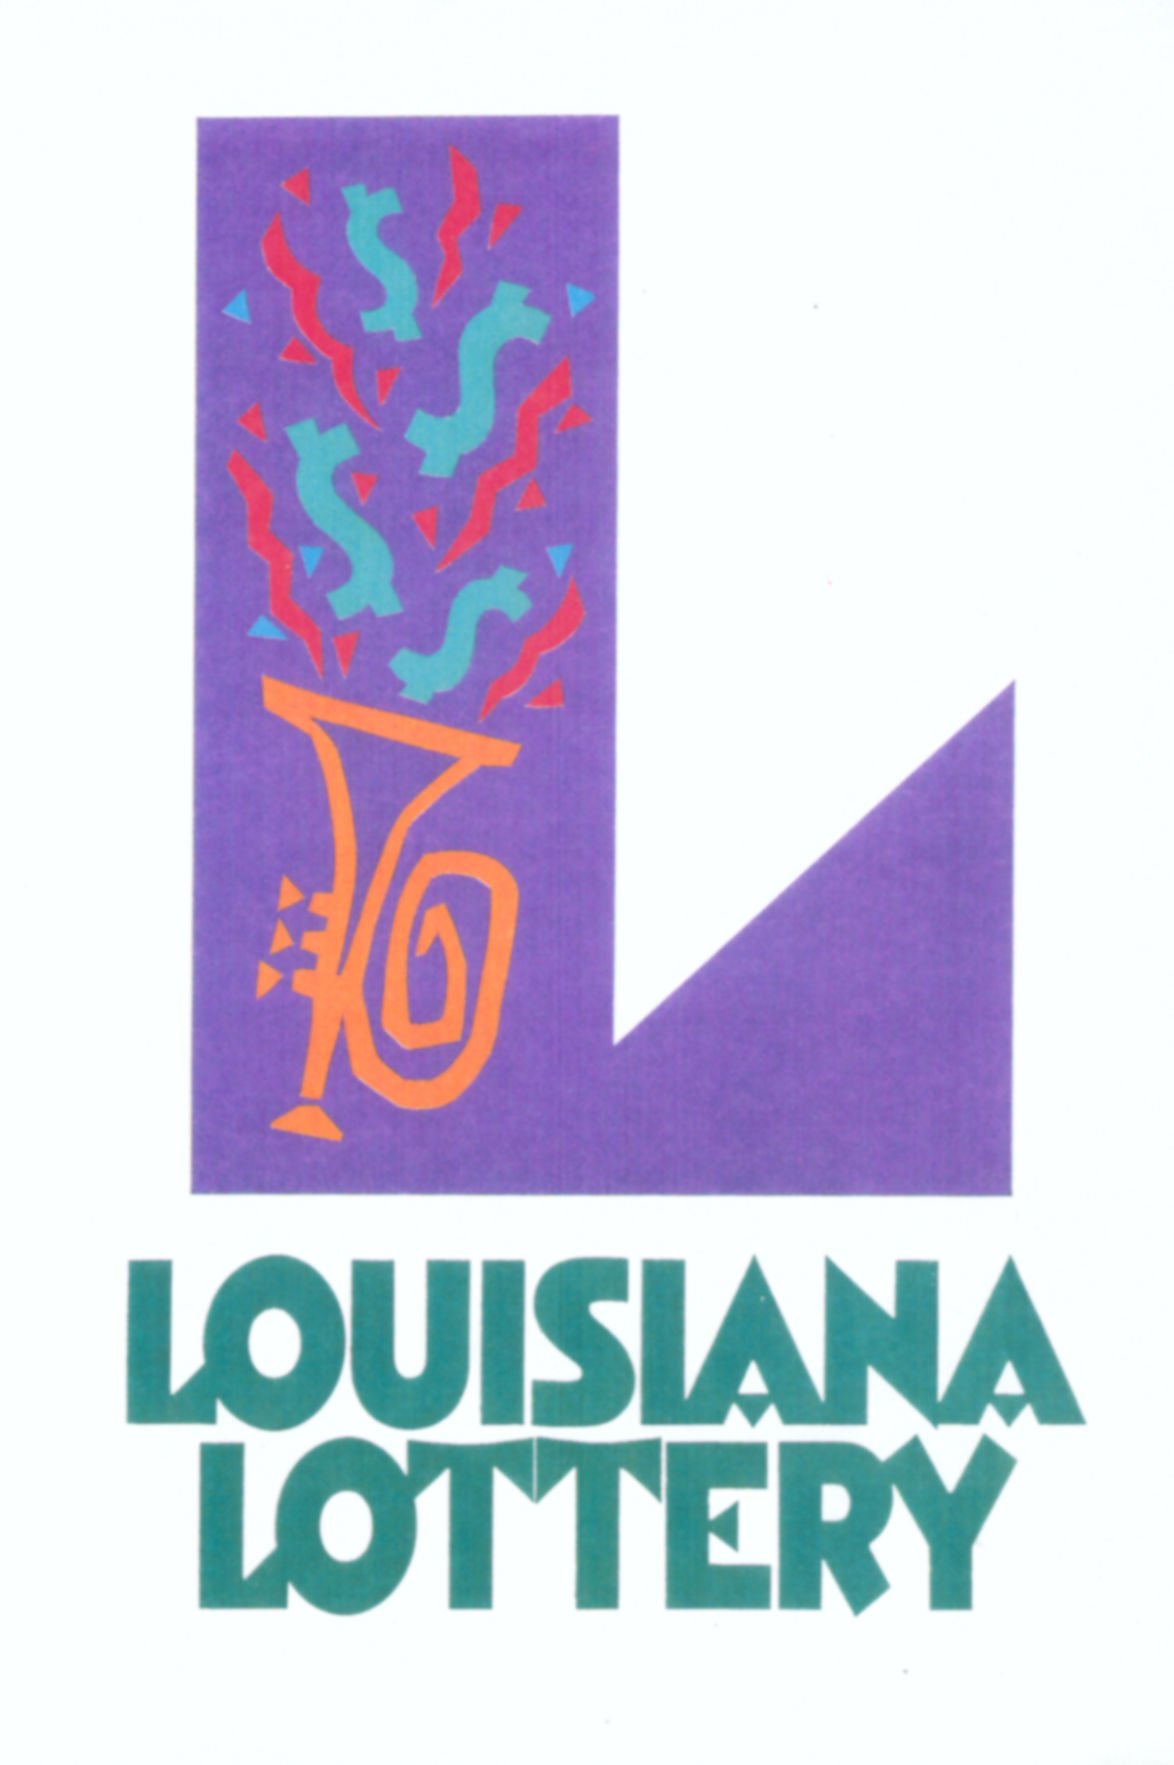 Louisiana lottery baton rouge - www.waldenwongart.com